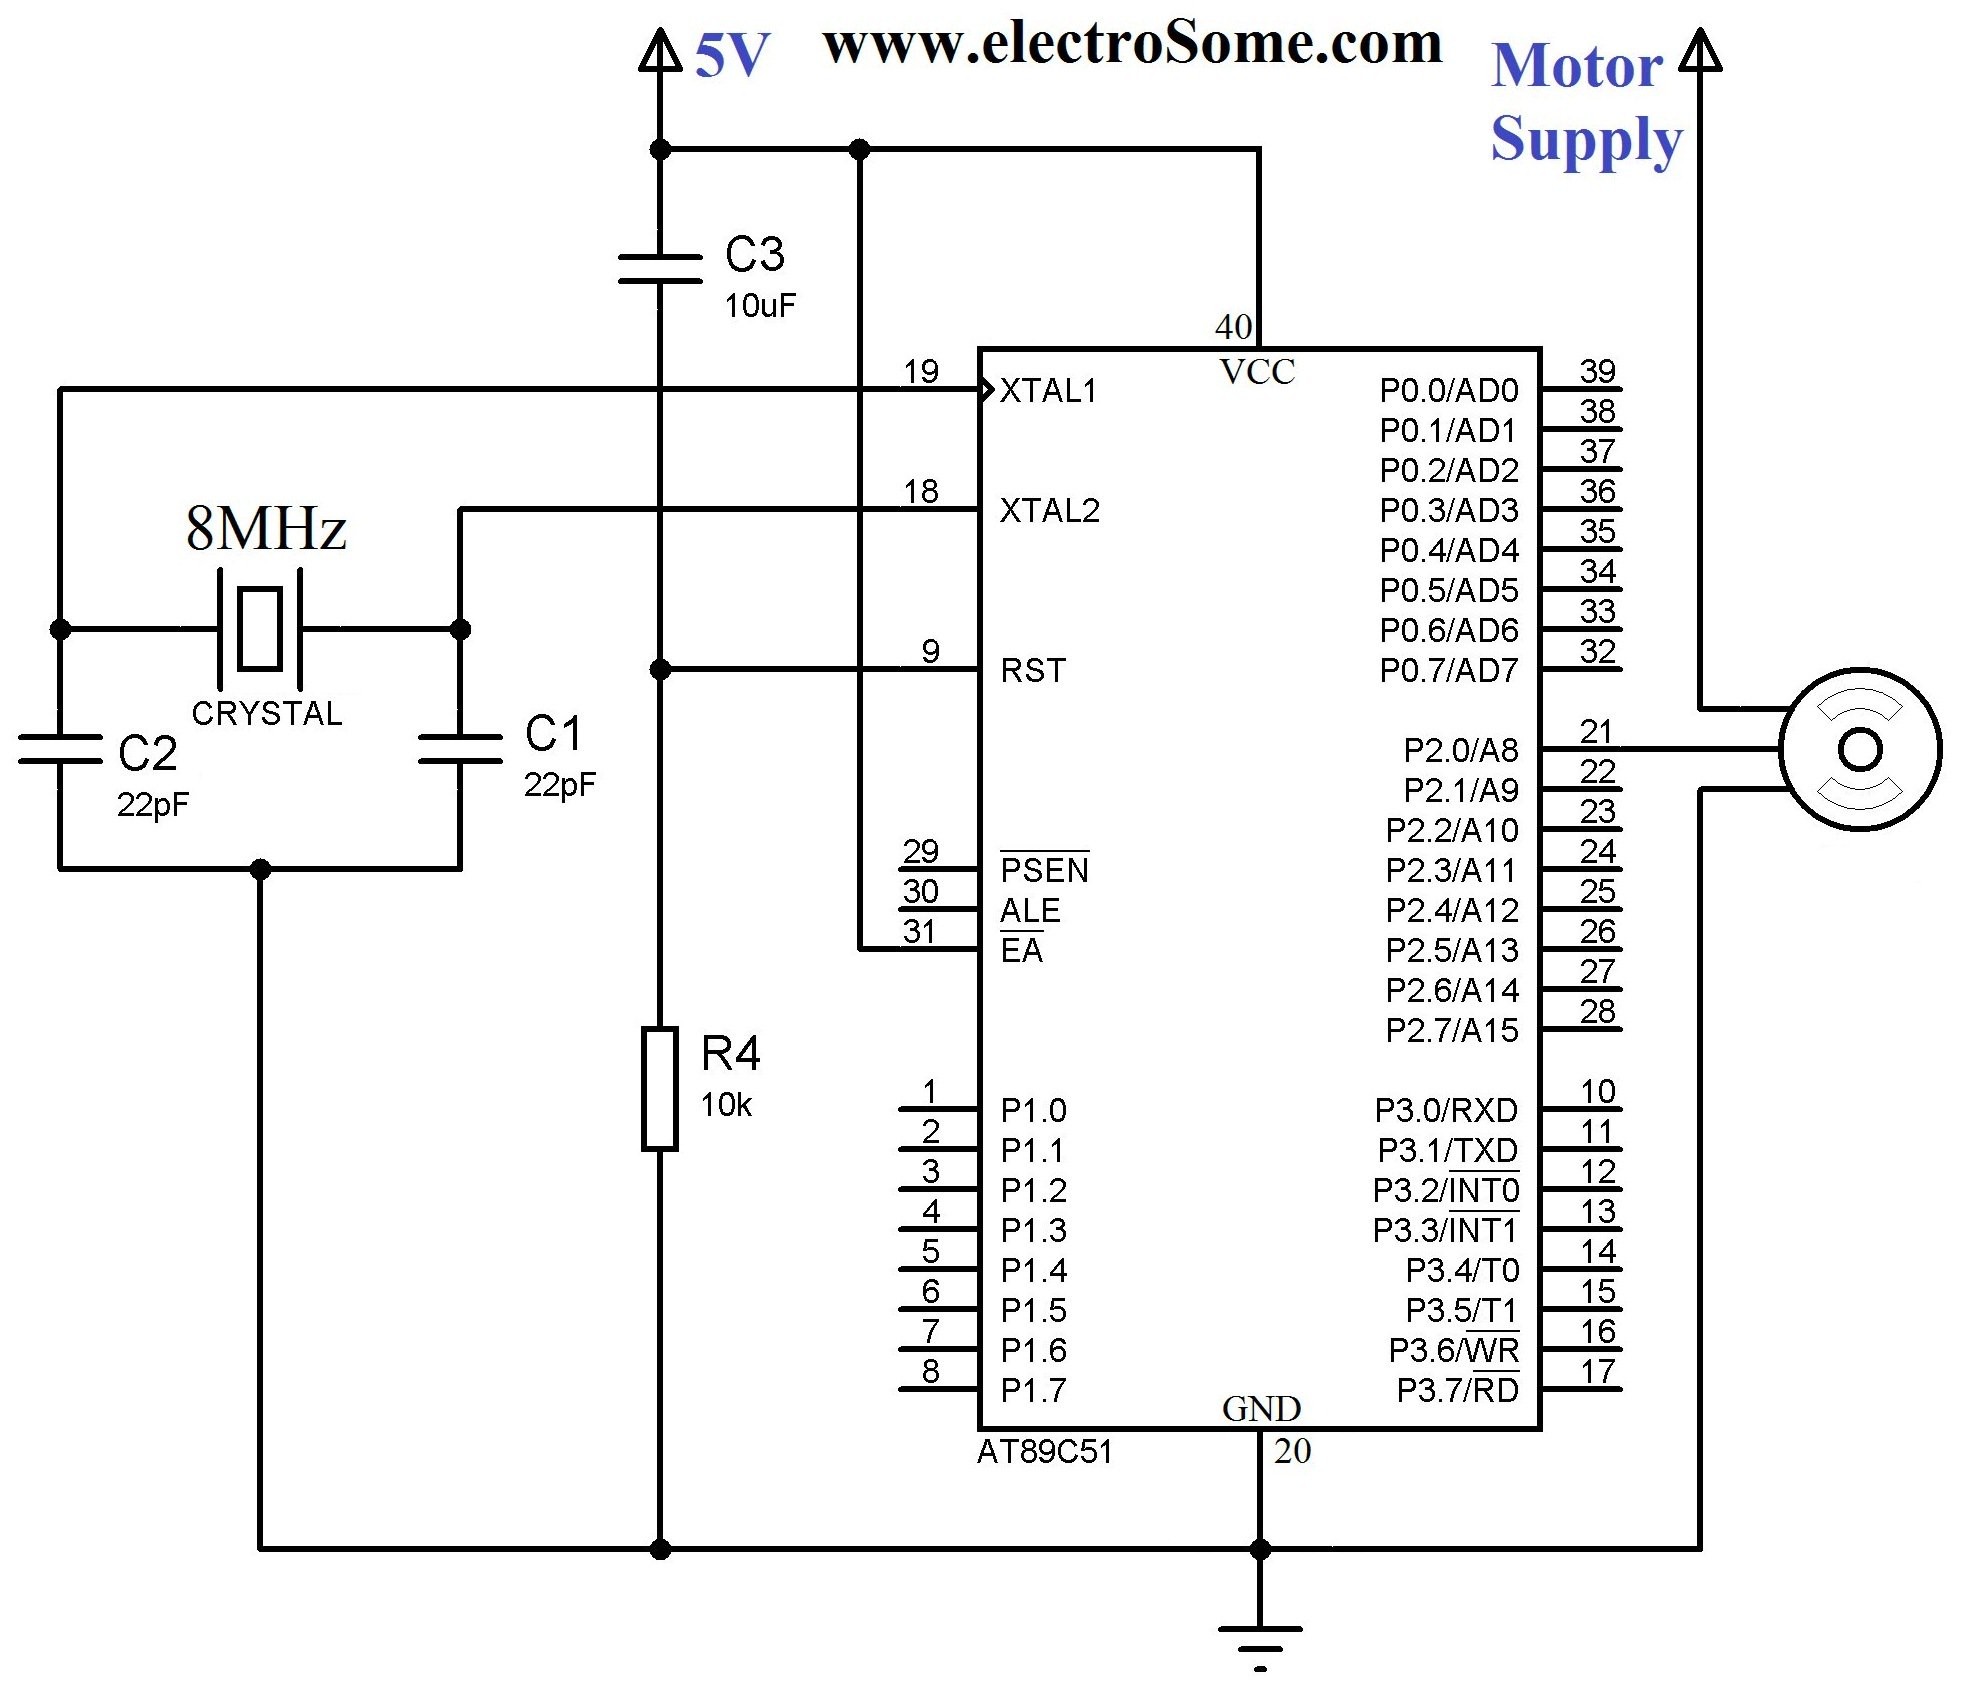 Servo Motor Wiring Diagram Interfacing Servo Motor with 8051 Microcontroller Using Keil C at89c51 Of Servo Motor Wiring Diagram